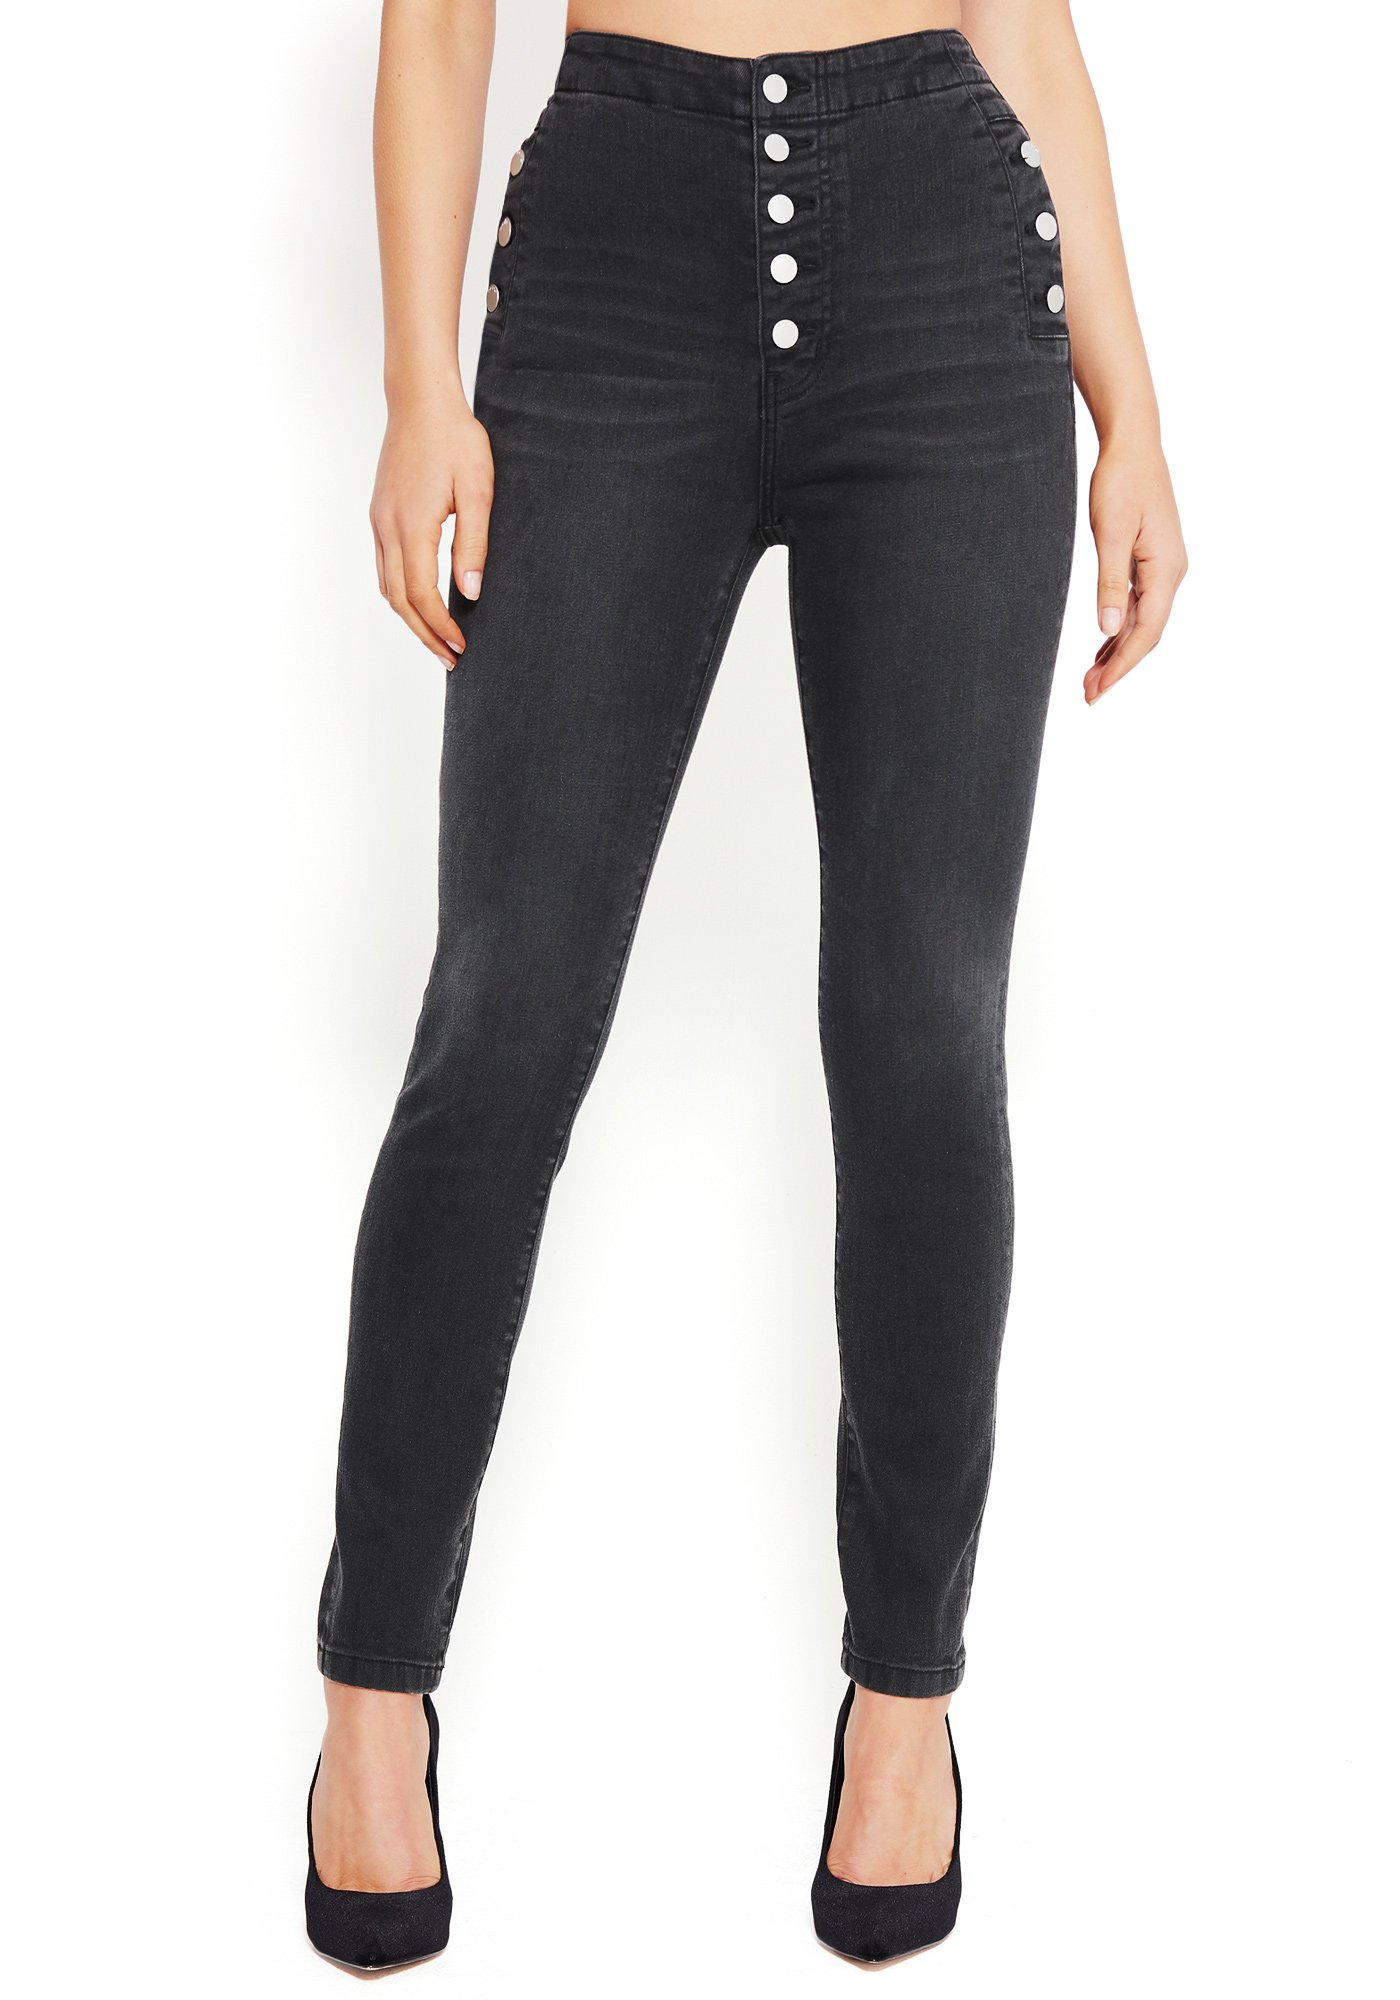 Bebe Women's Button Trim High Waist Jeans, Size 29 in Black Wash Cotton/Spandex